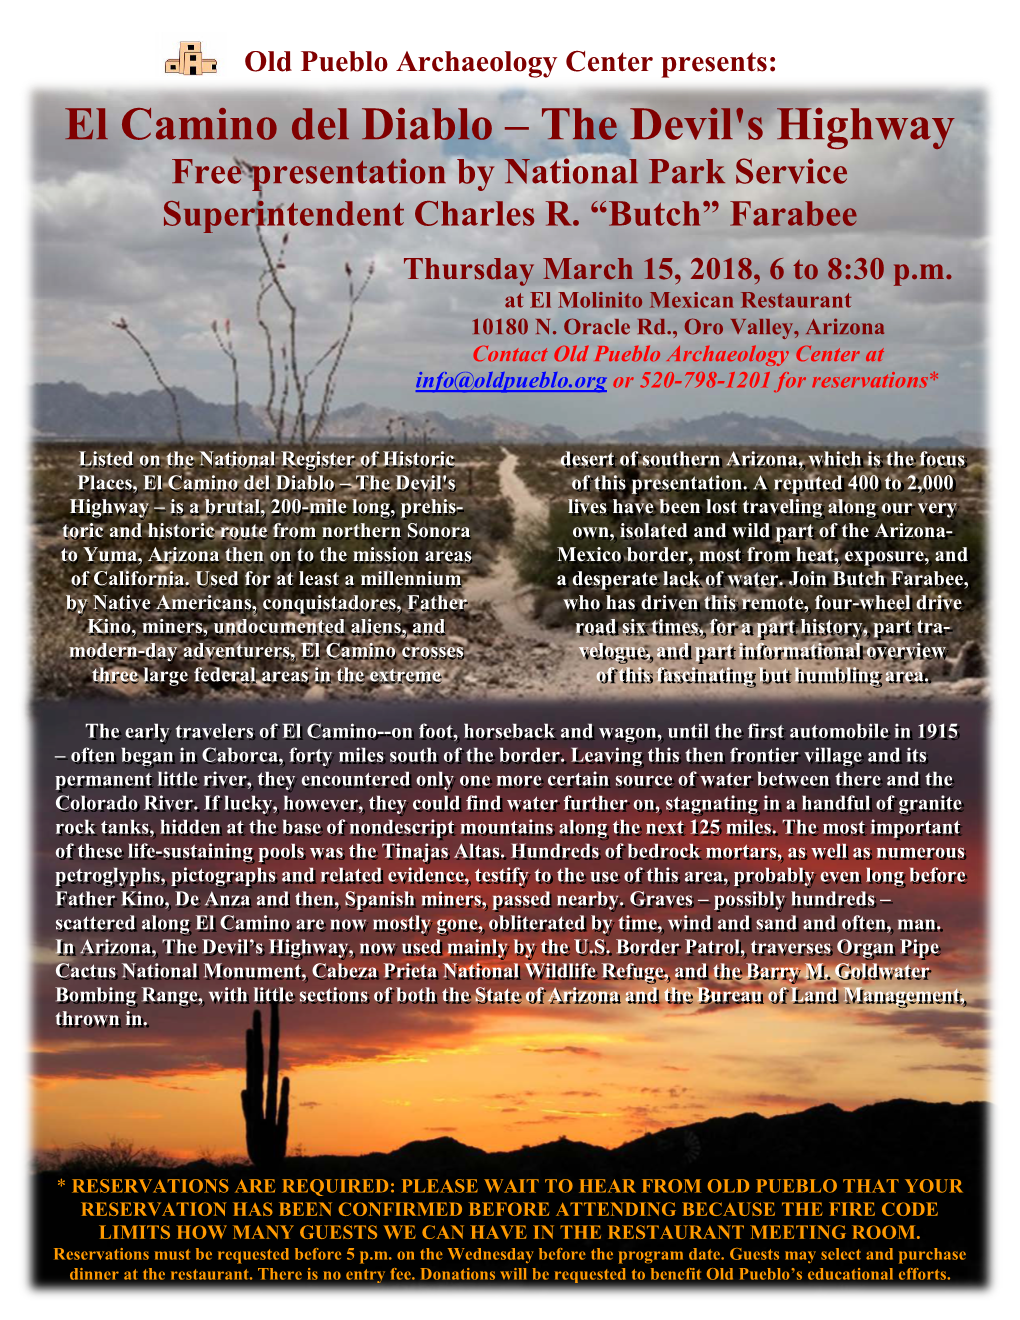 El Camino Del Diablo – the Devil's Highway Free Presentation by National Park Service Superintendent Charles R